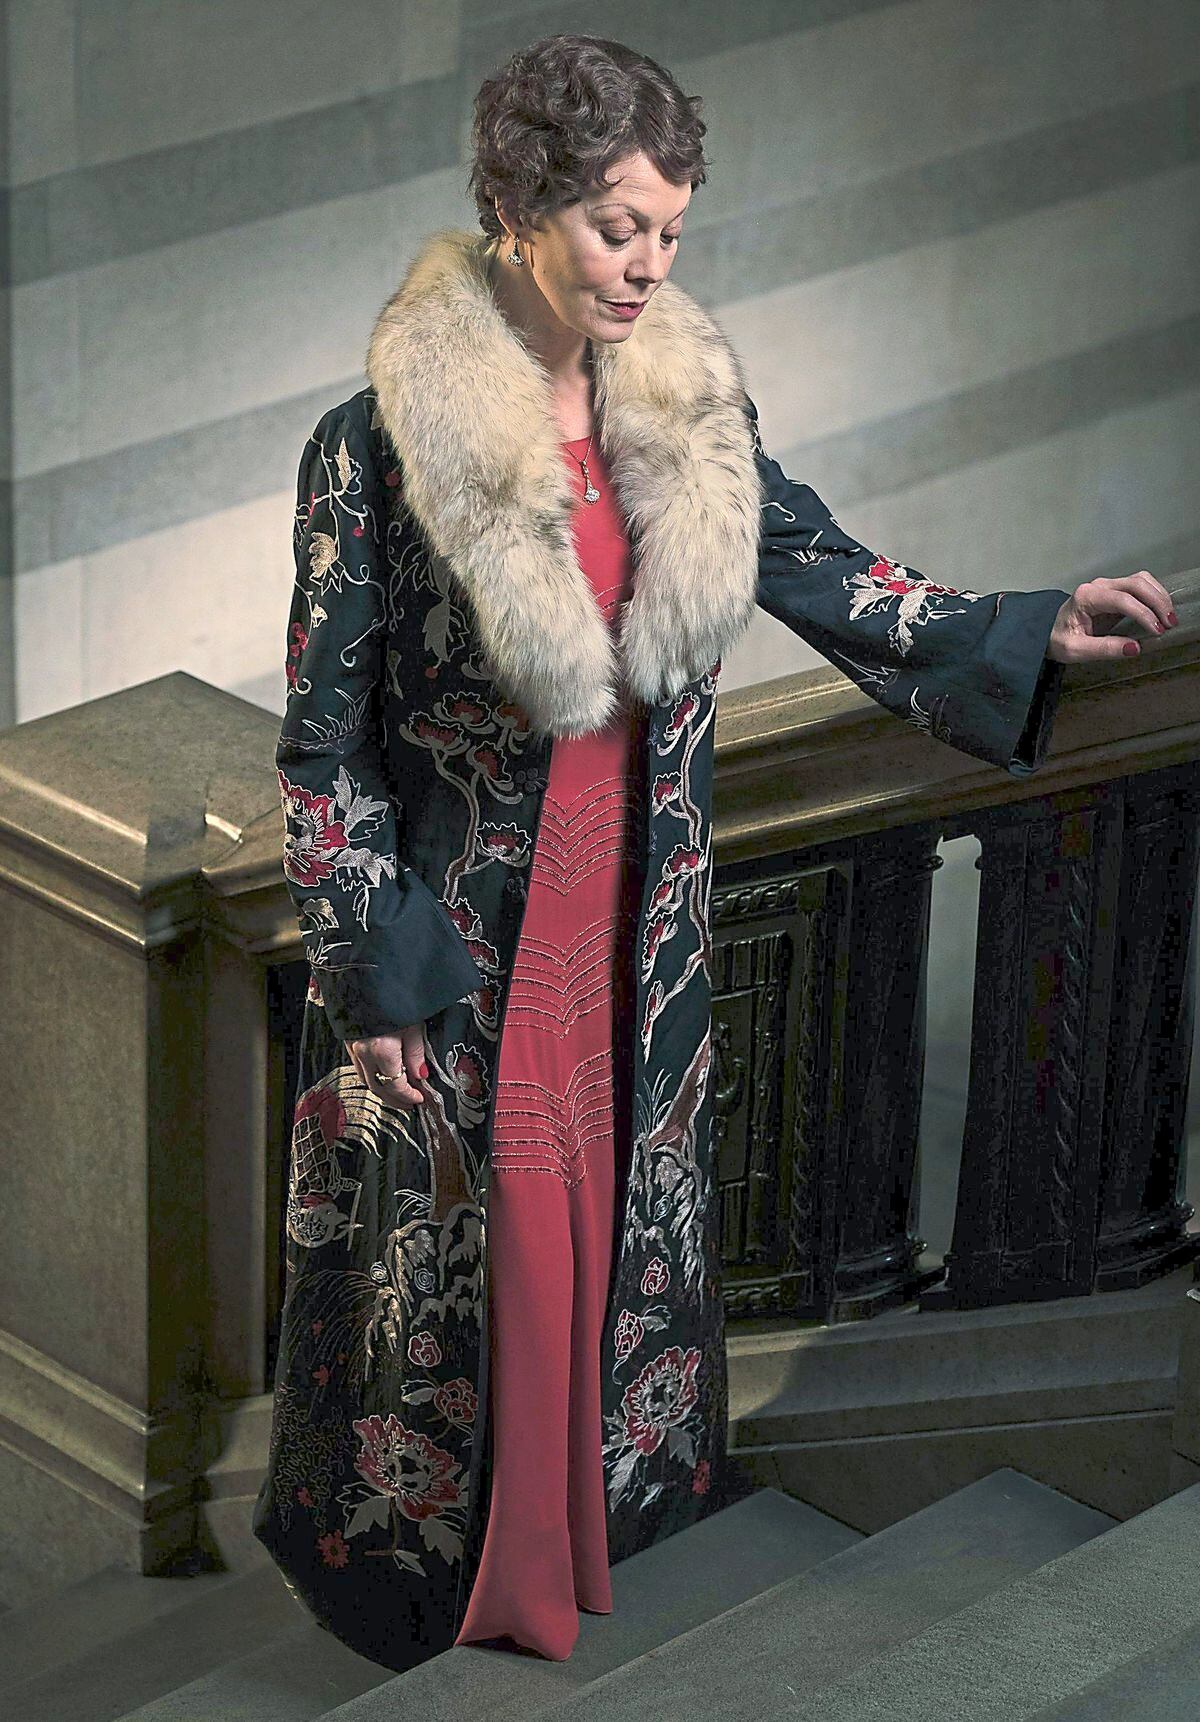 Helen McCrory as Polly Gray in Peaky Blinders. Pic: Matt Squire